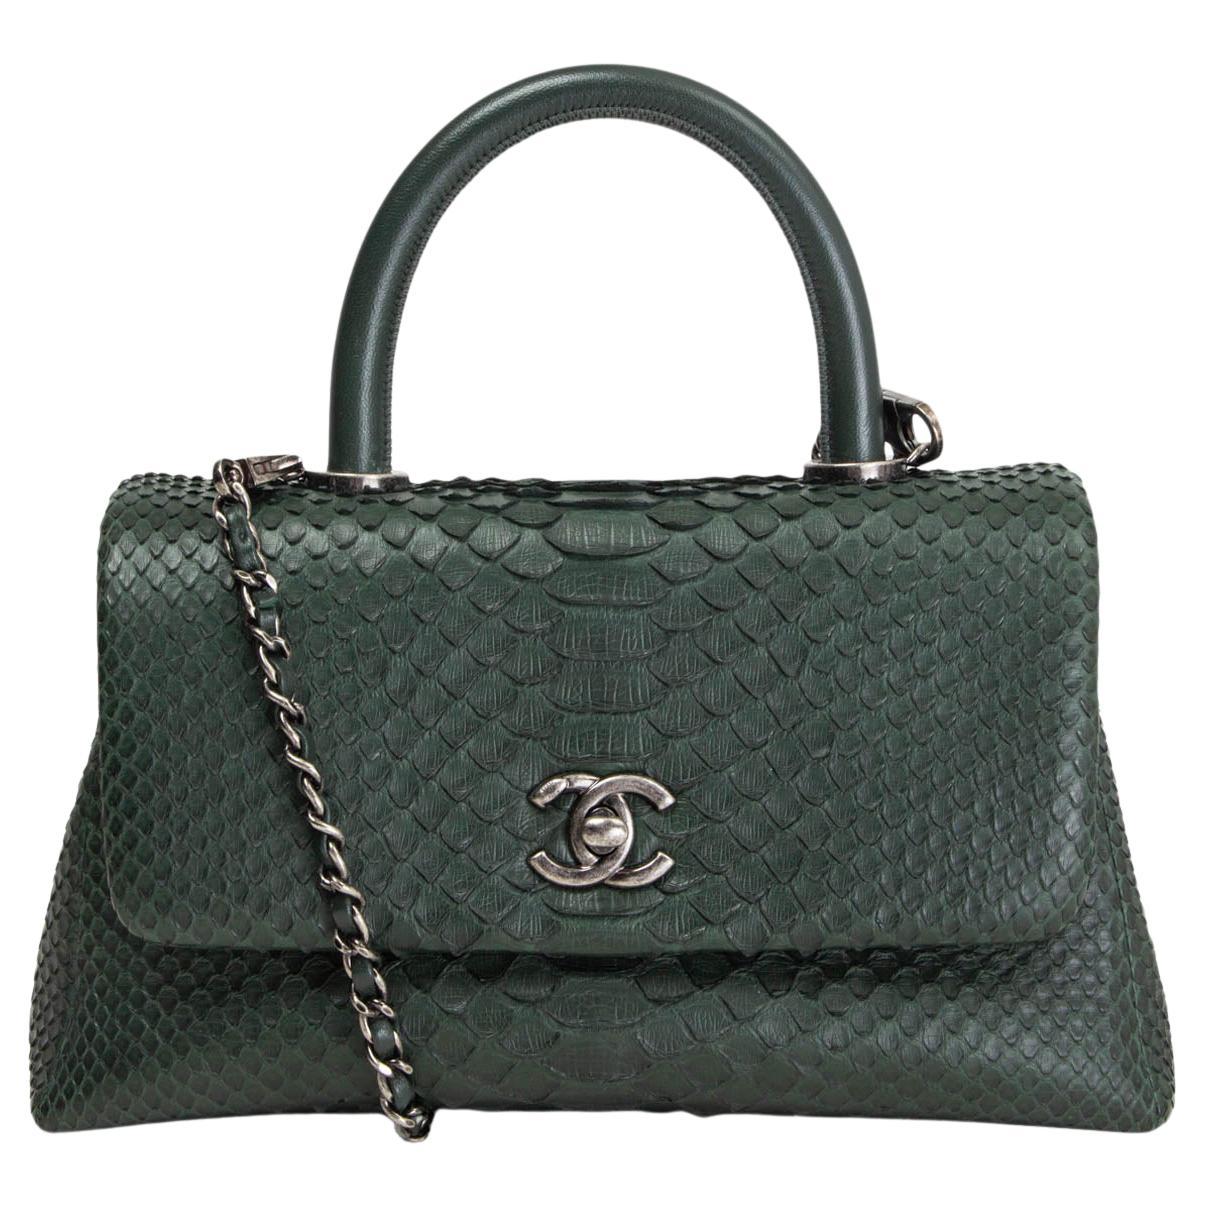 CHANEL dark green 2016 PYTHON COCO HANDLE SMALL FLAP Bag